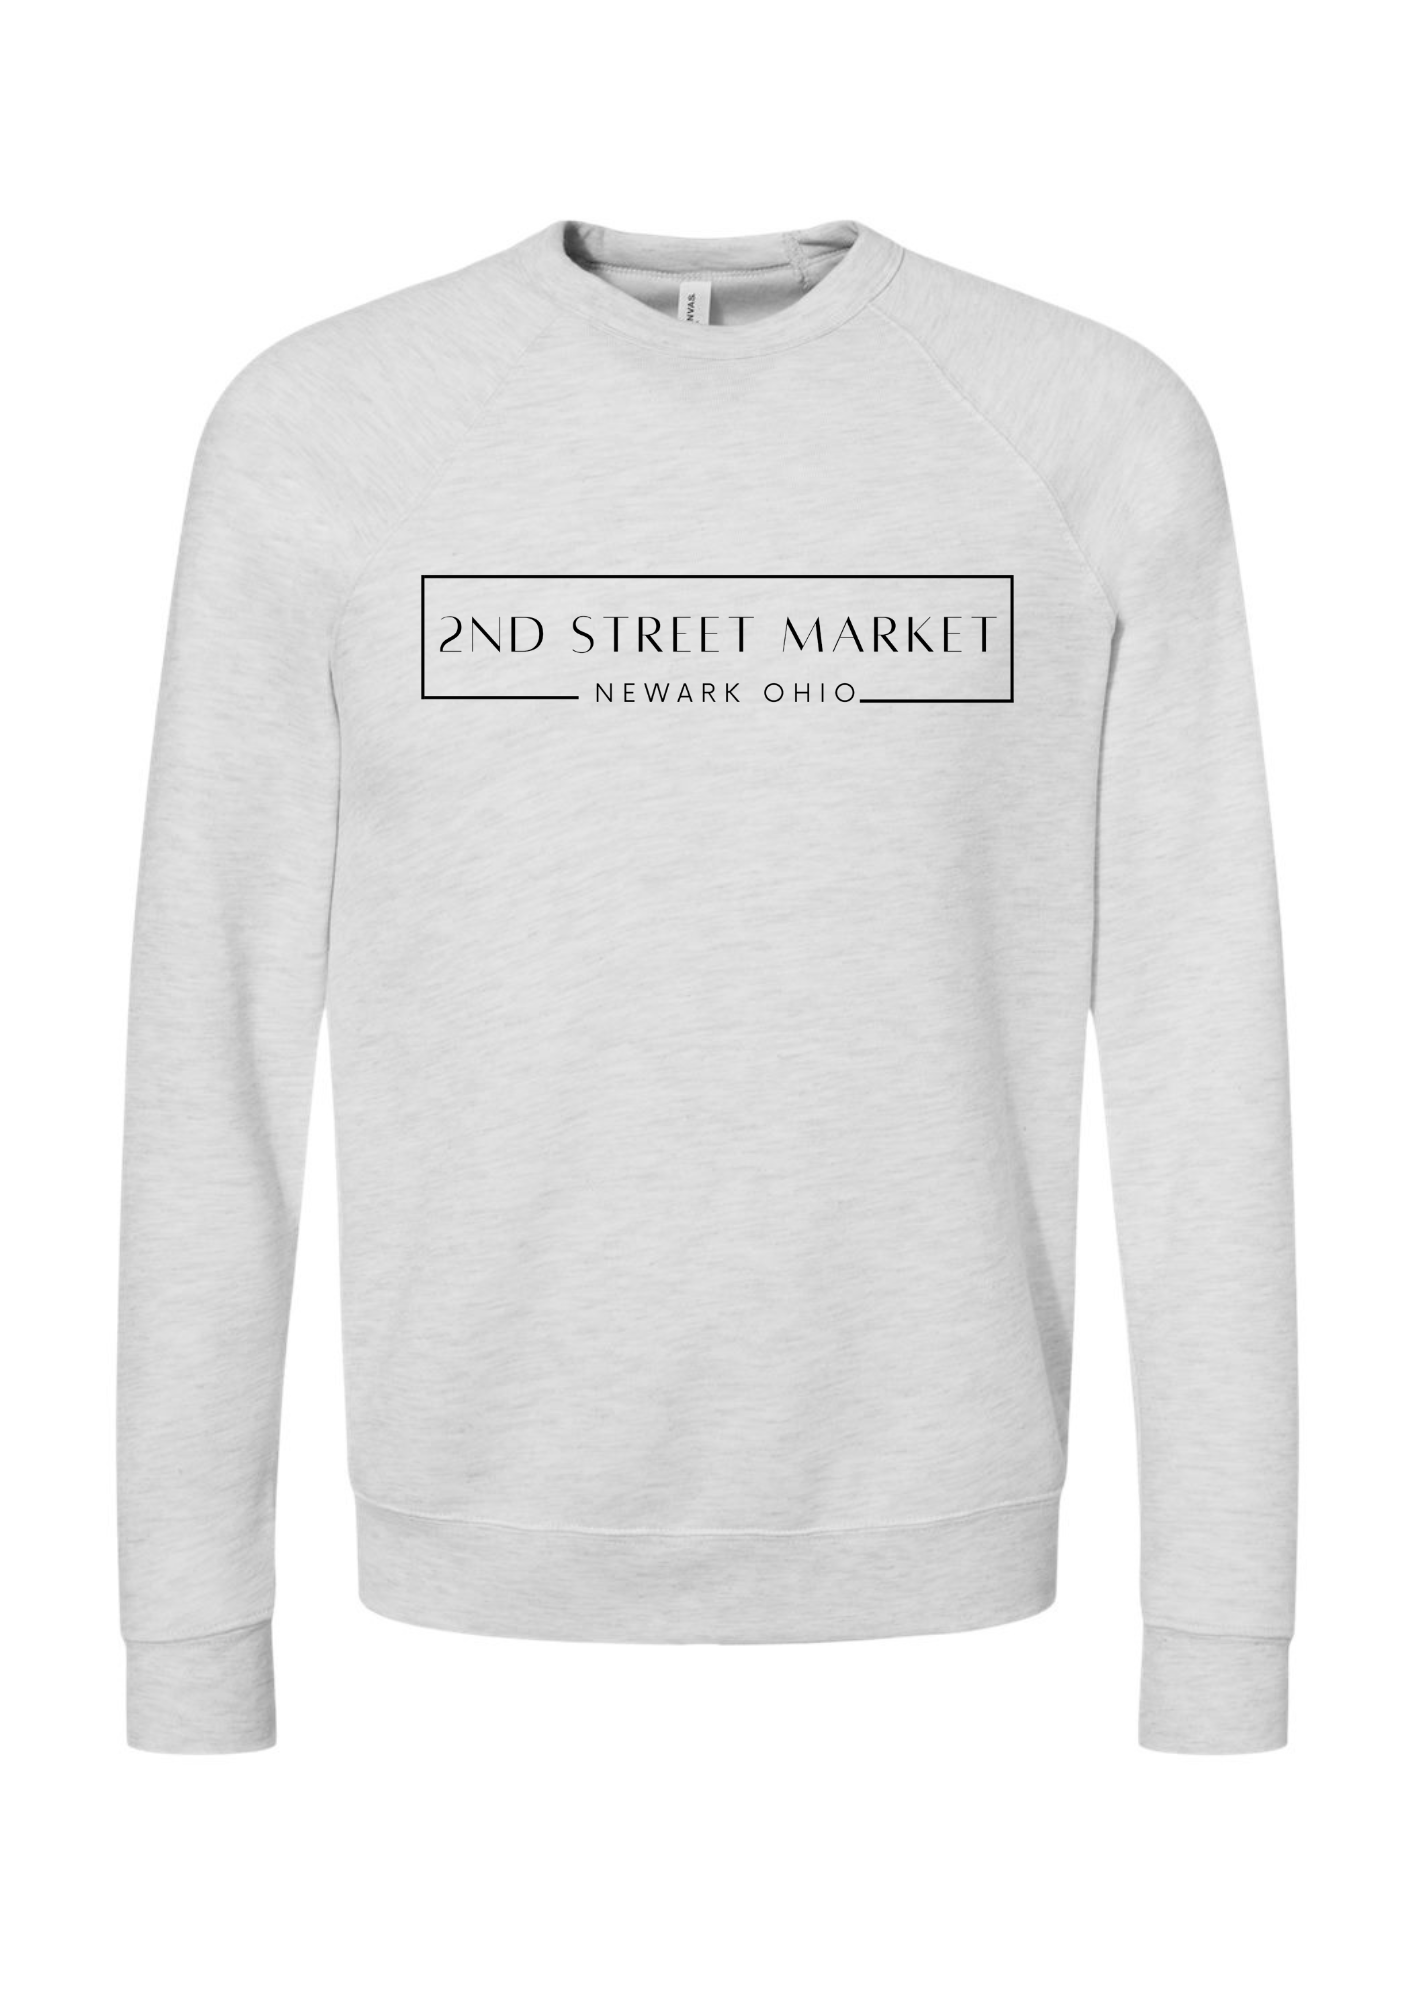 2nd Street Market Crewneck Sweatshirt